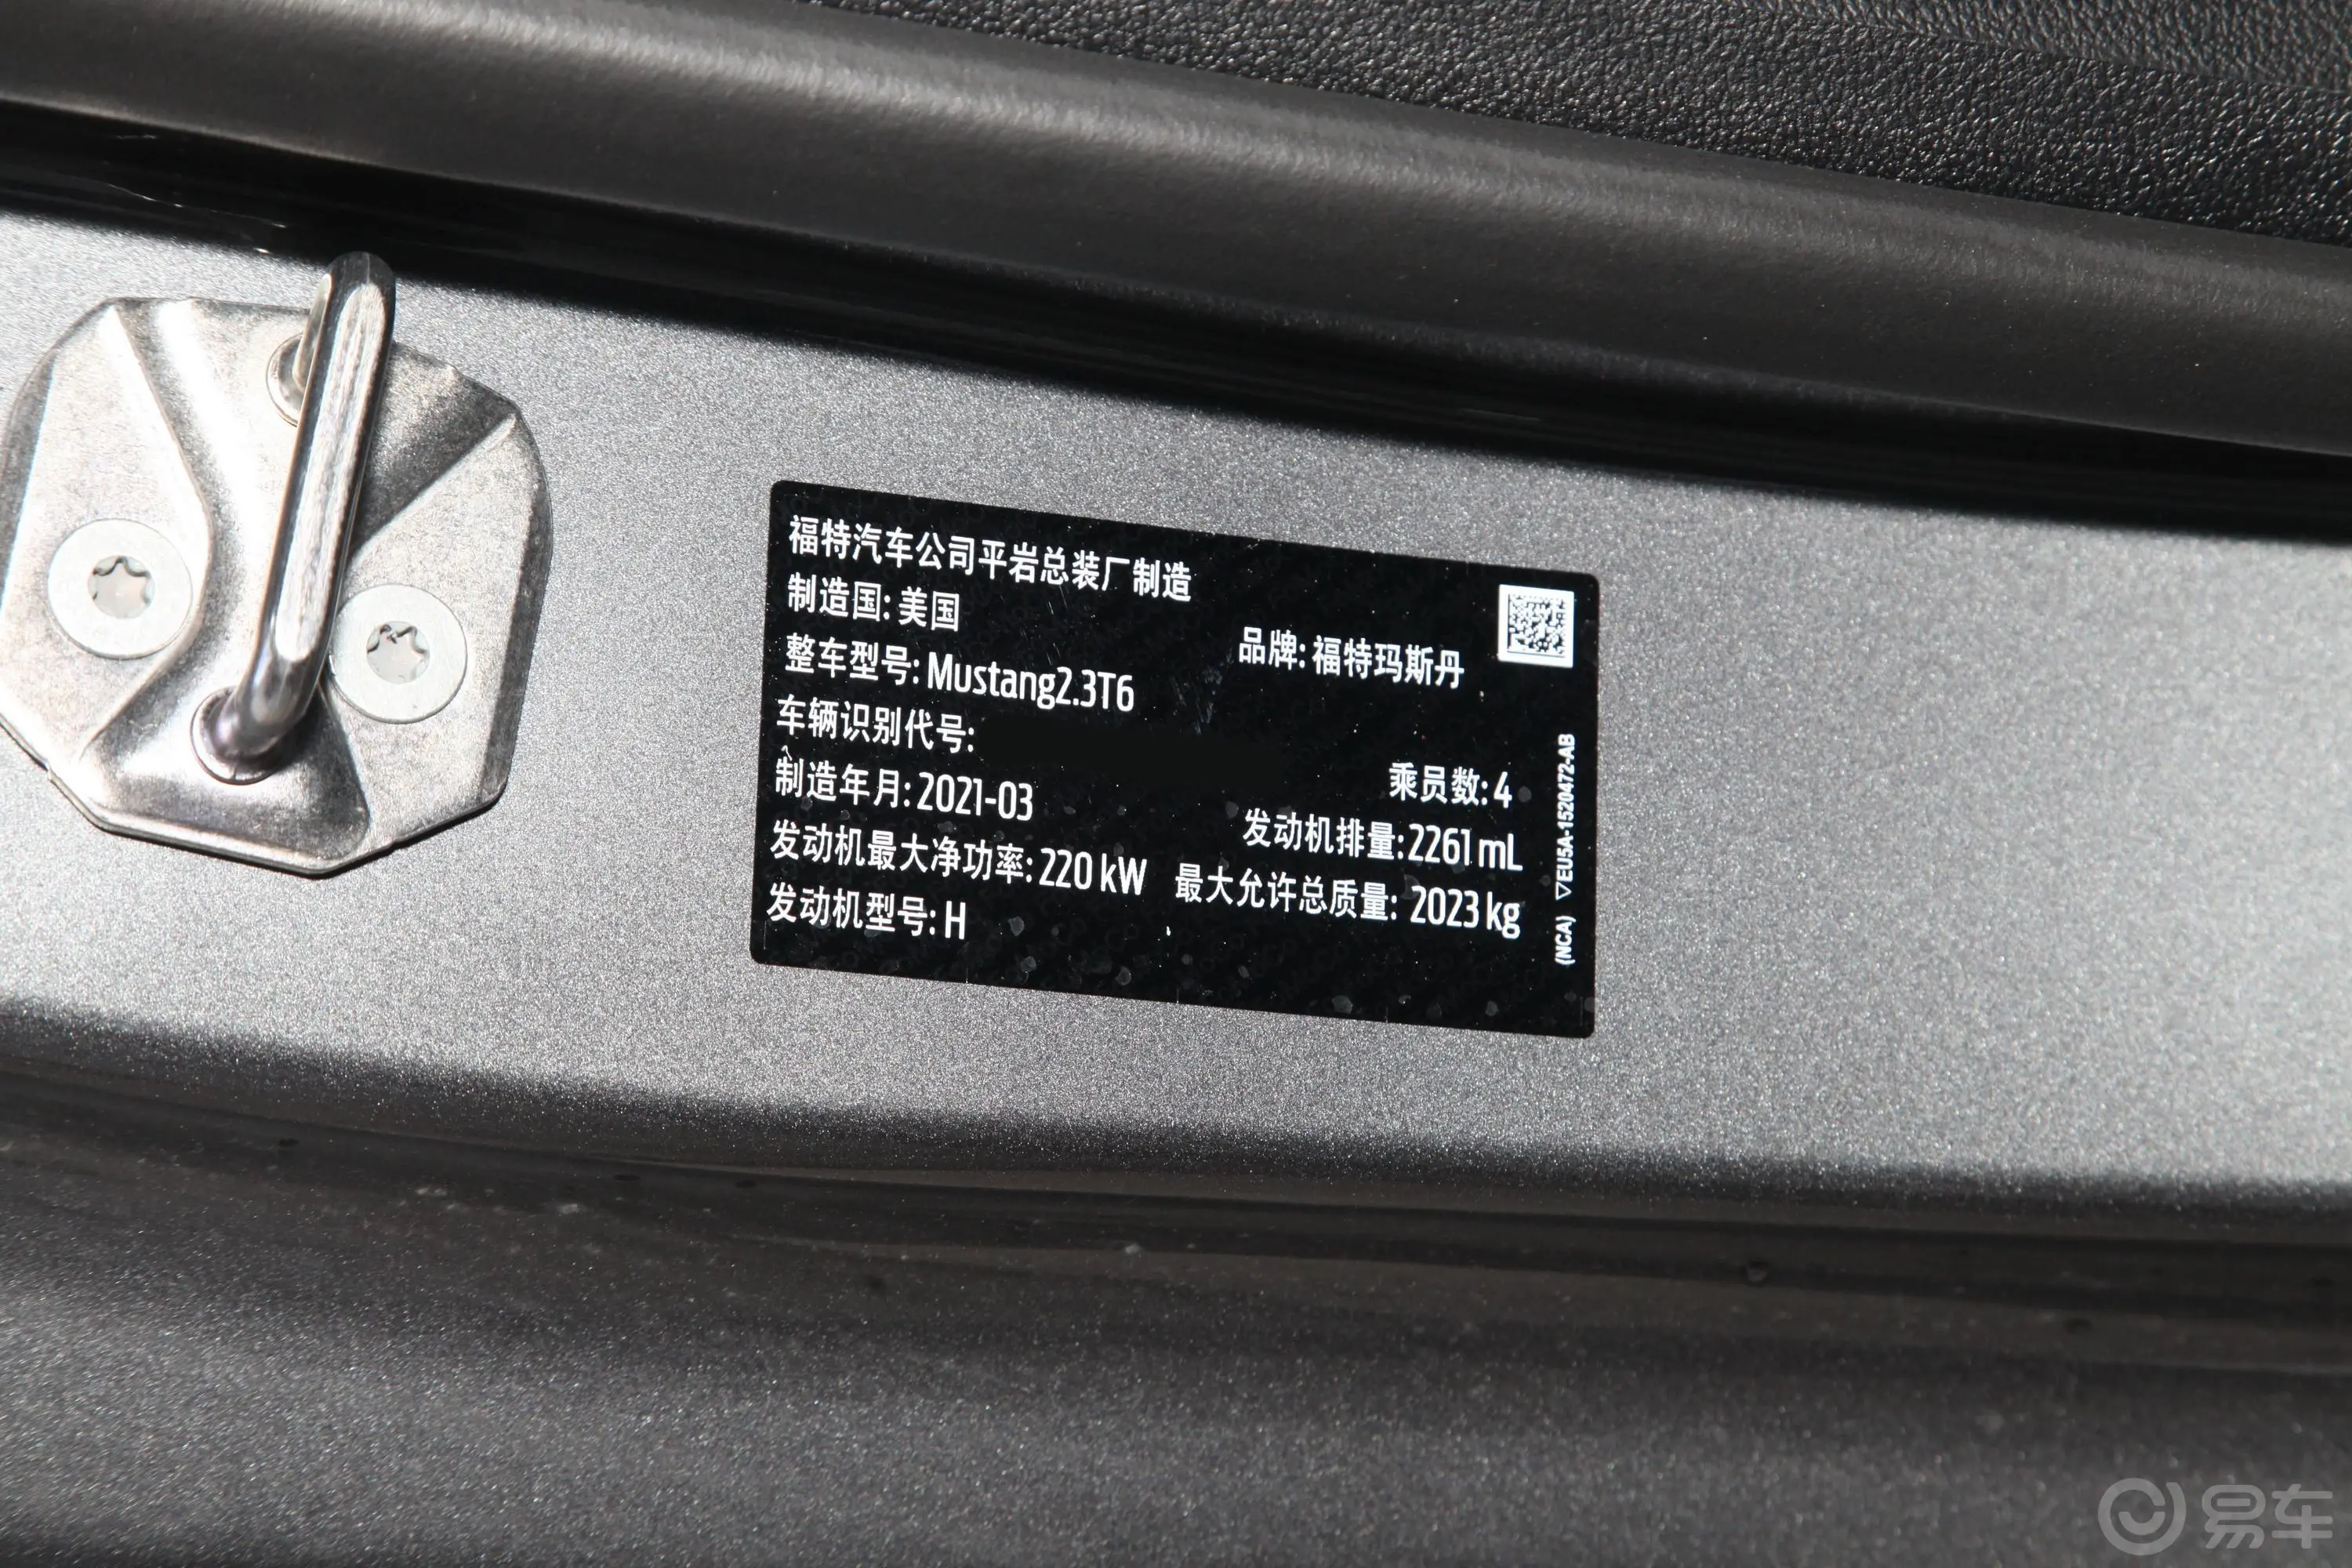 Mustang2.3T 基本版车辆信息铭牌